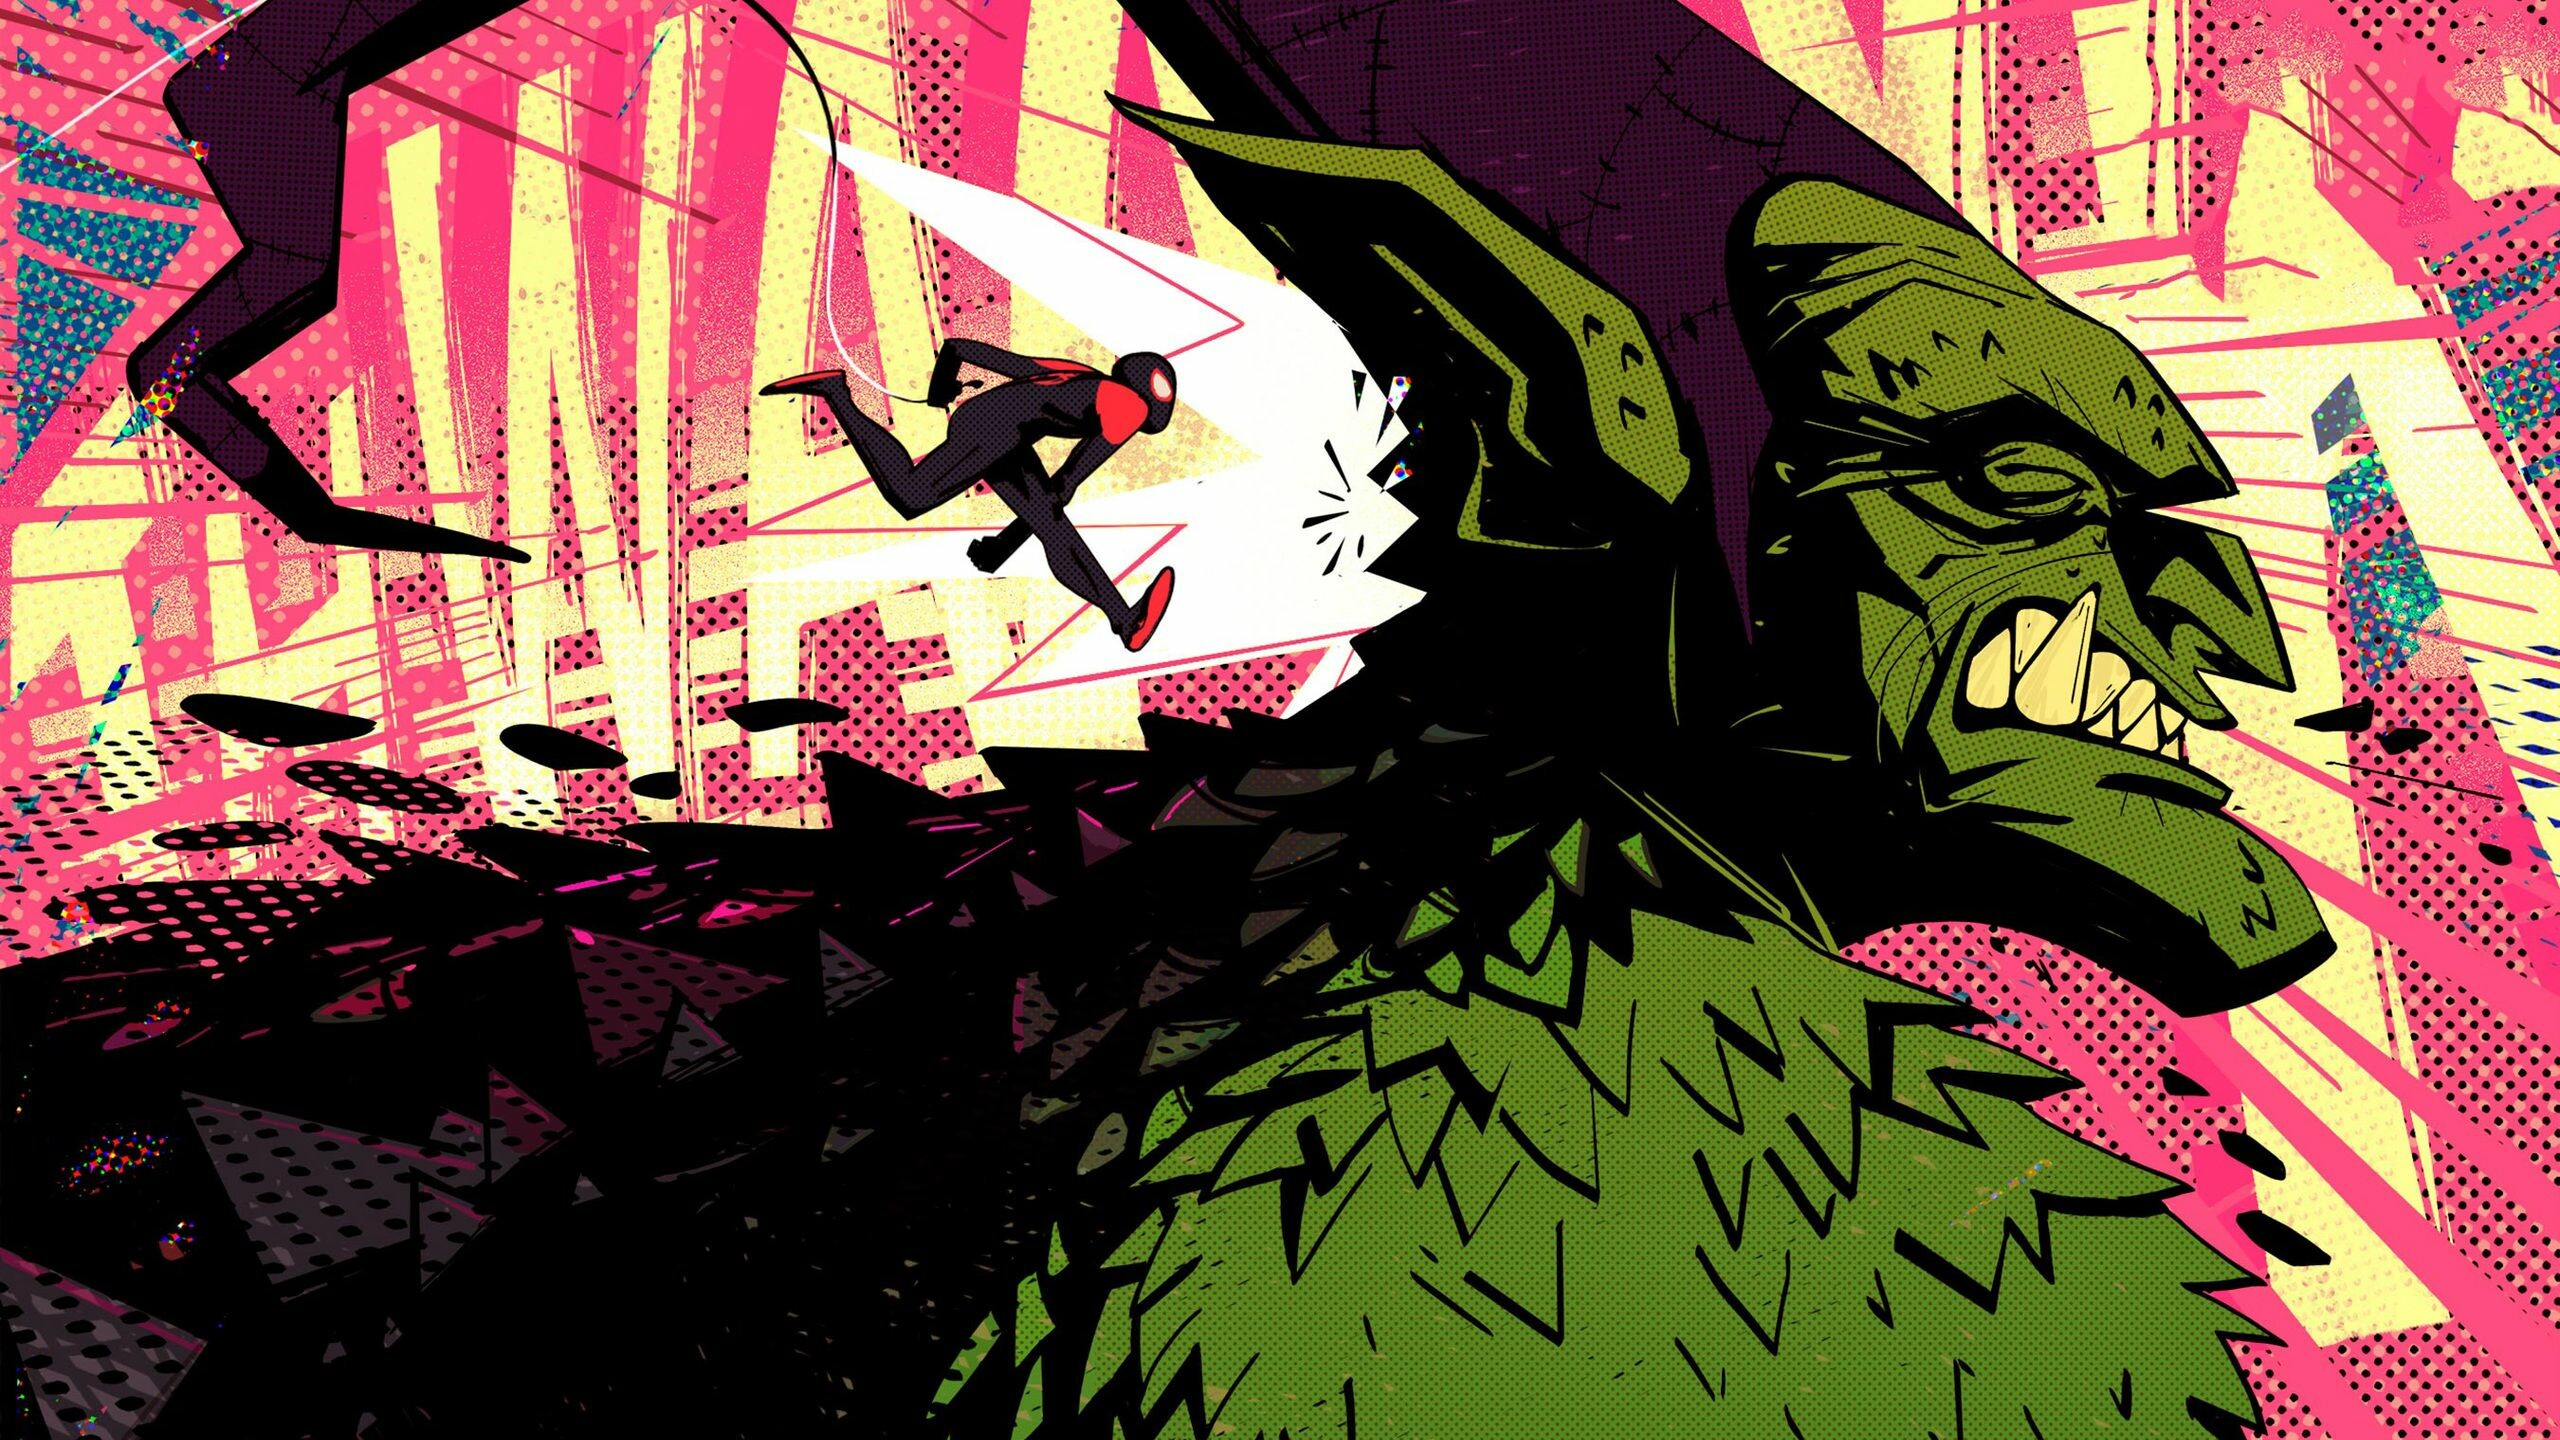 Green Goblin: The main archenemy of Spider-Man, Animation. 2560x1440 HD Wallpaper.